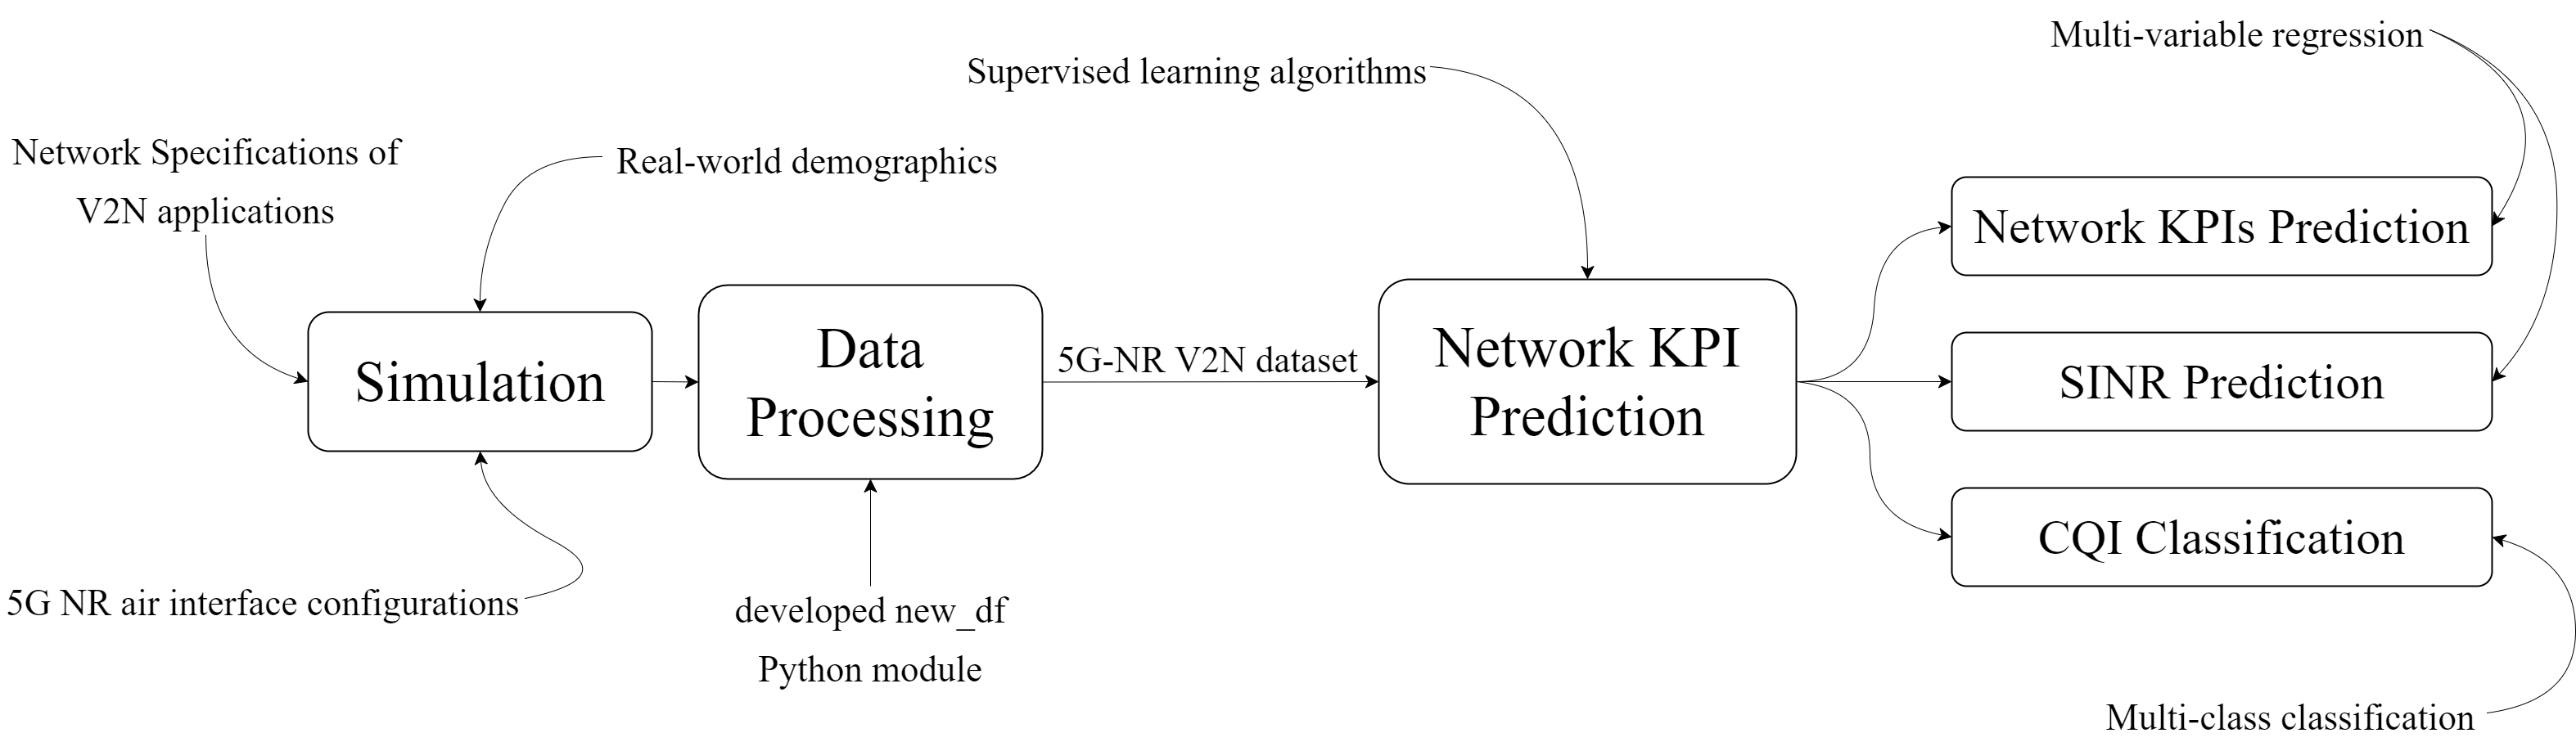 Cellular Network KPI Prediction on Simulated 5G-NR V2N Traffic Dataset